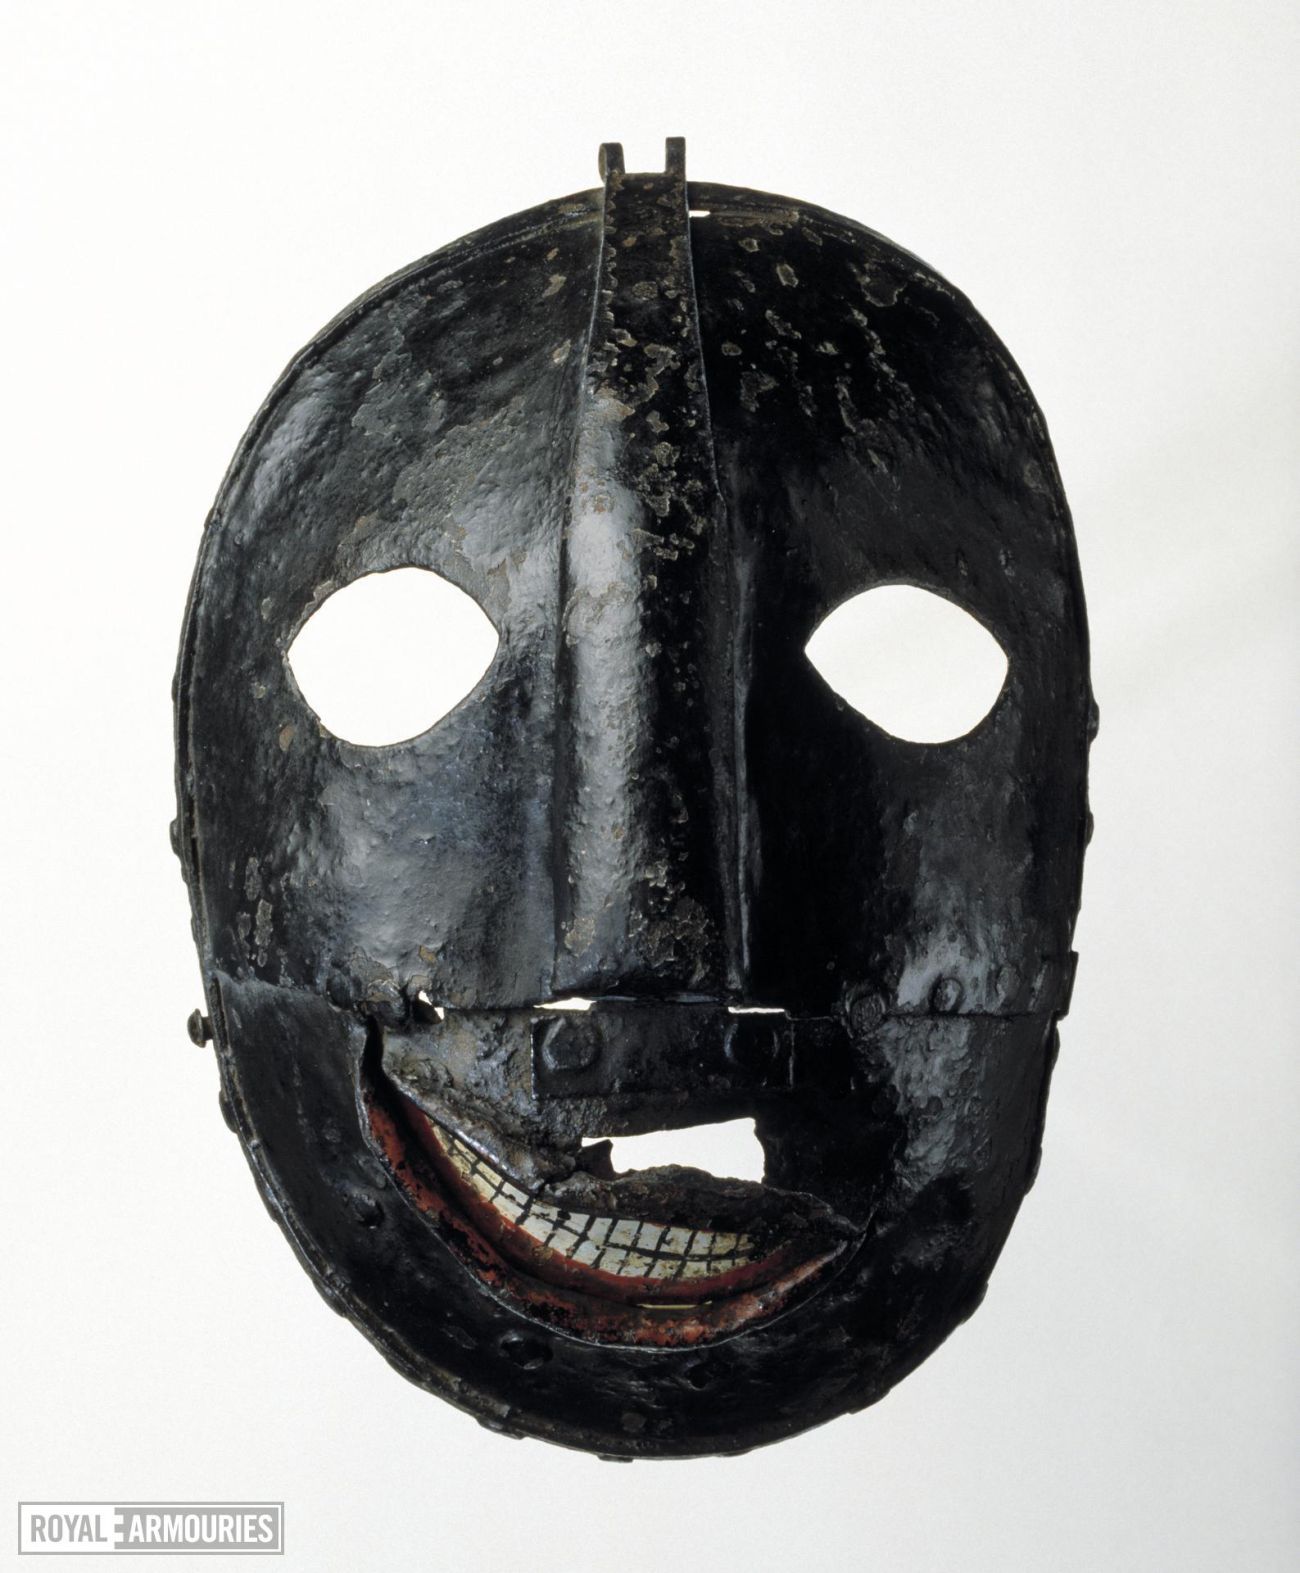 Executioner's mask photographed against white background